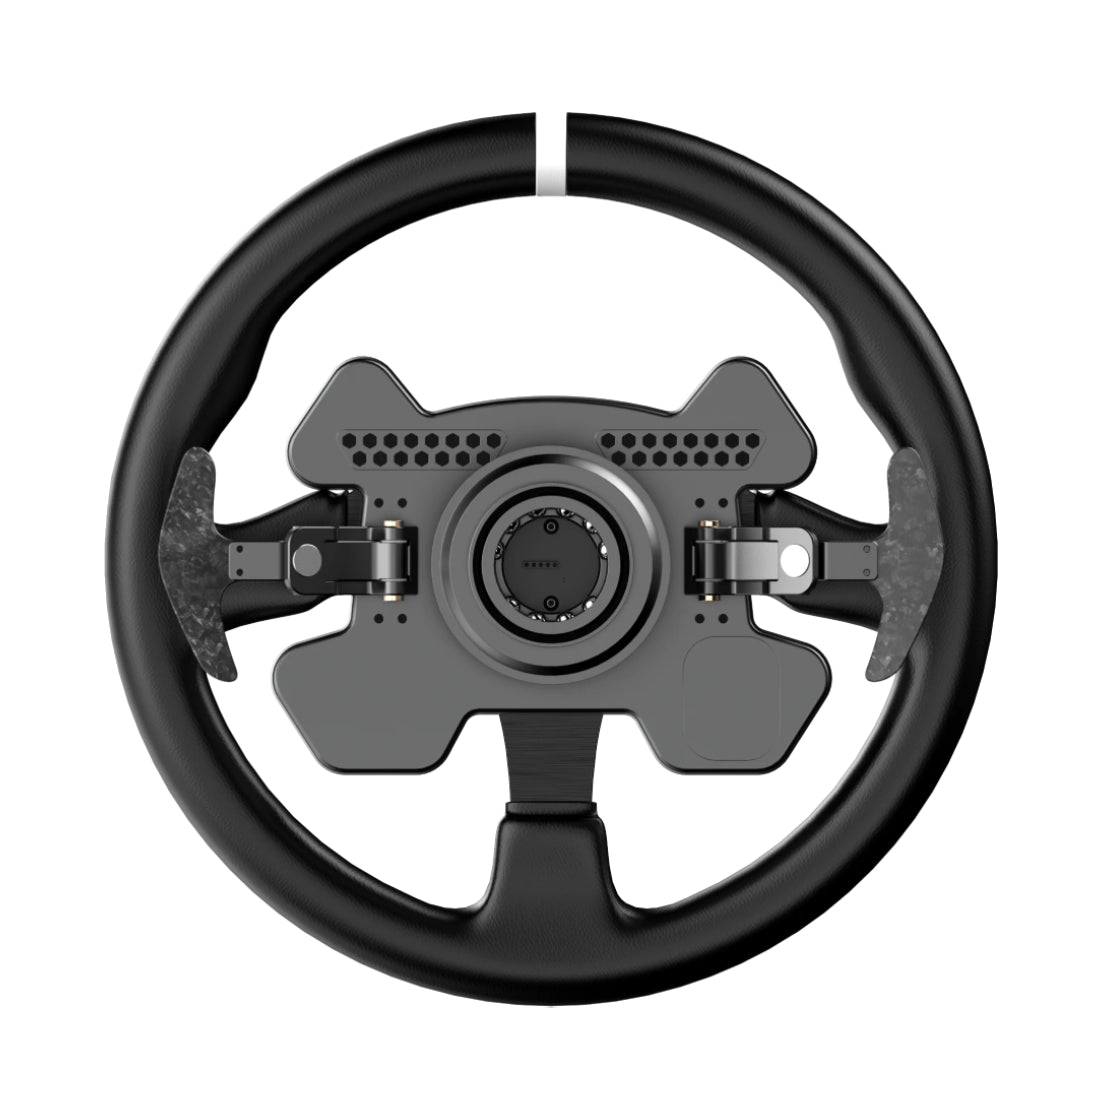 Moza CS V2 Steering Wheel - عجلة قيادة - Store 974 | ستور ٩٧٤